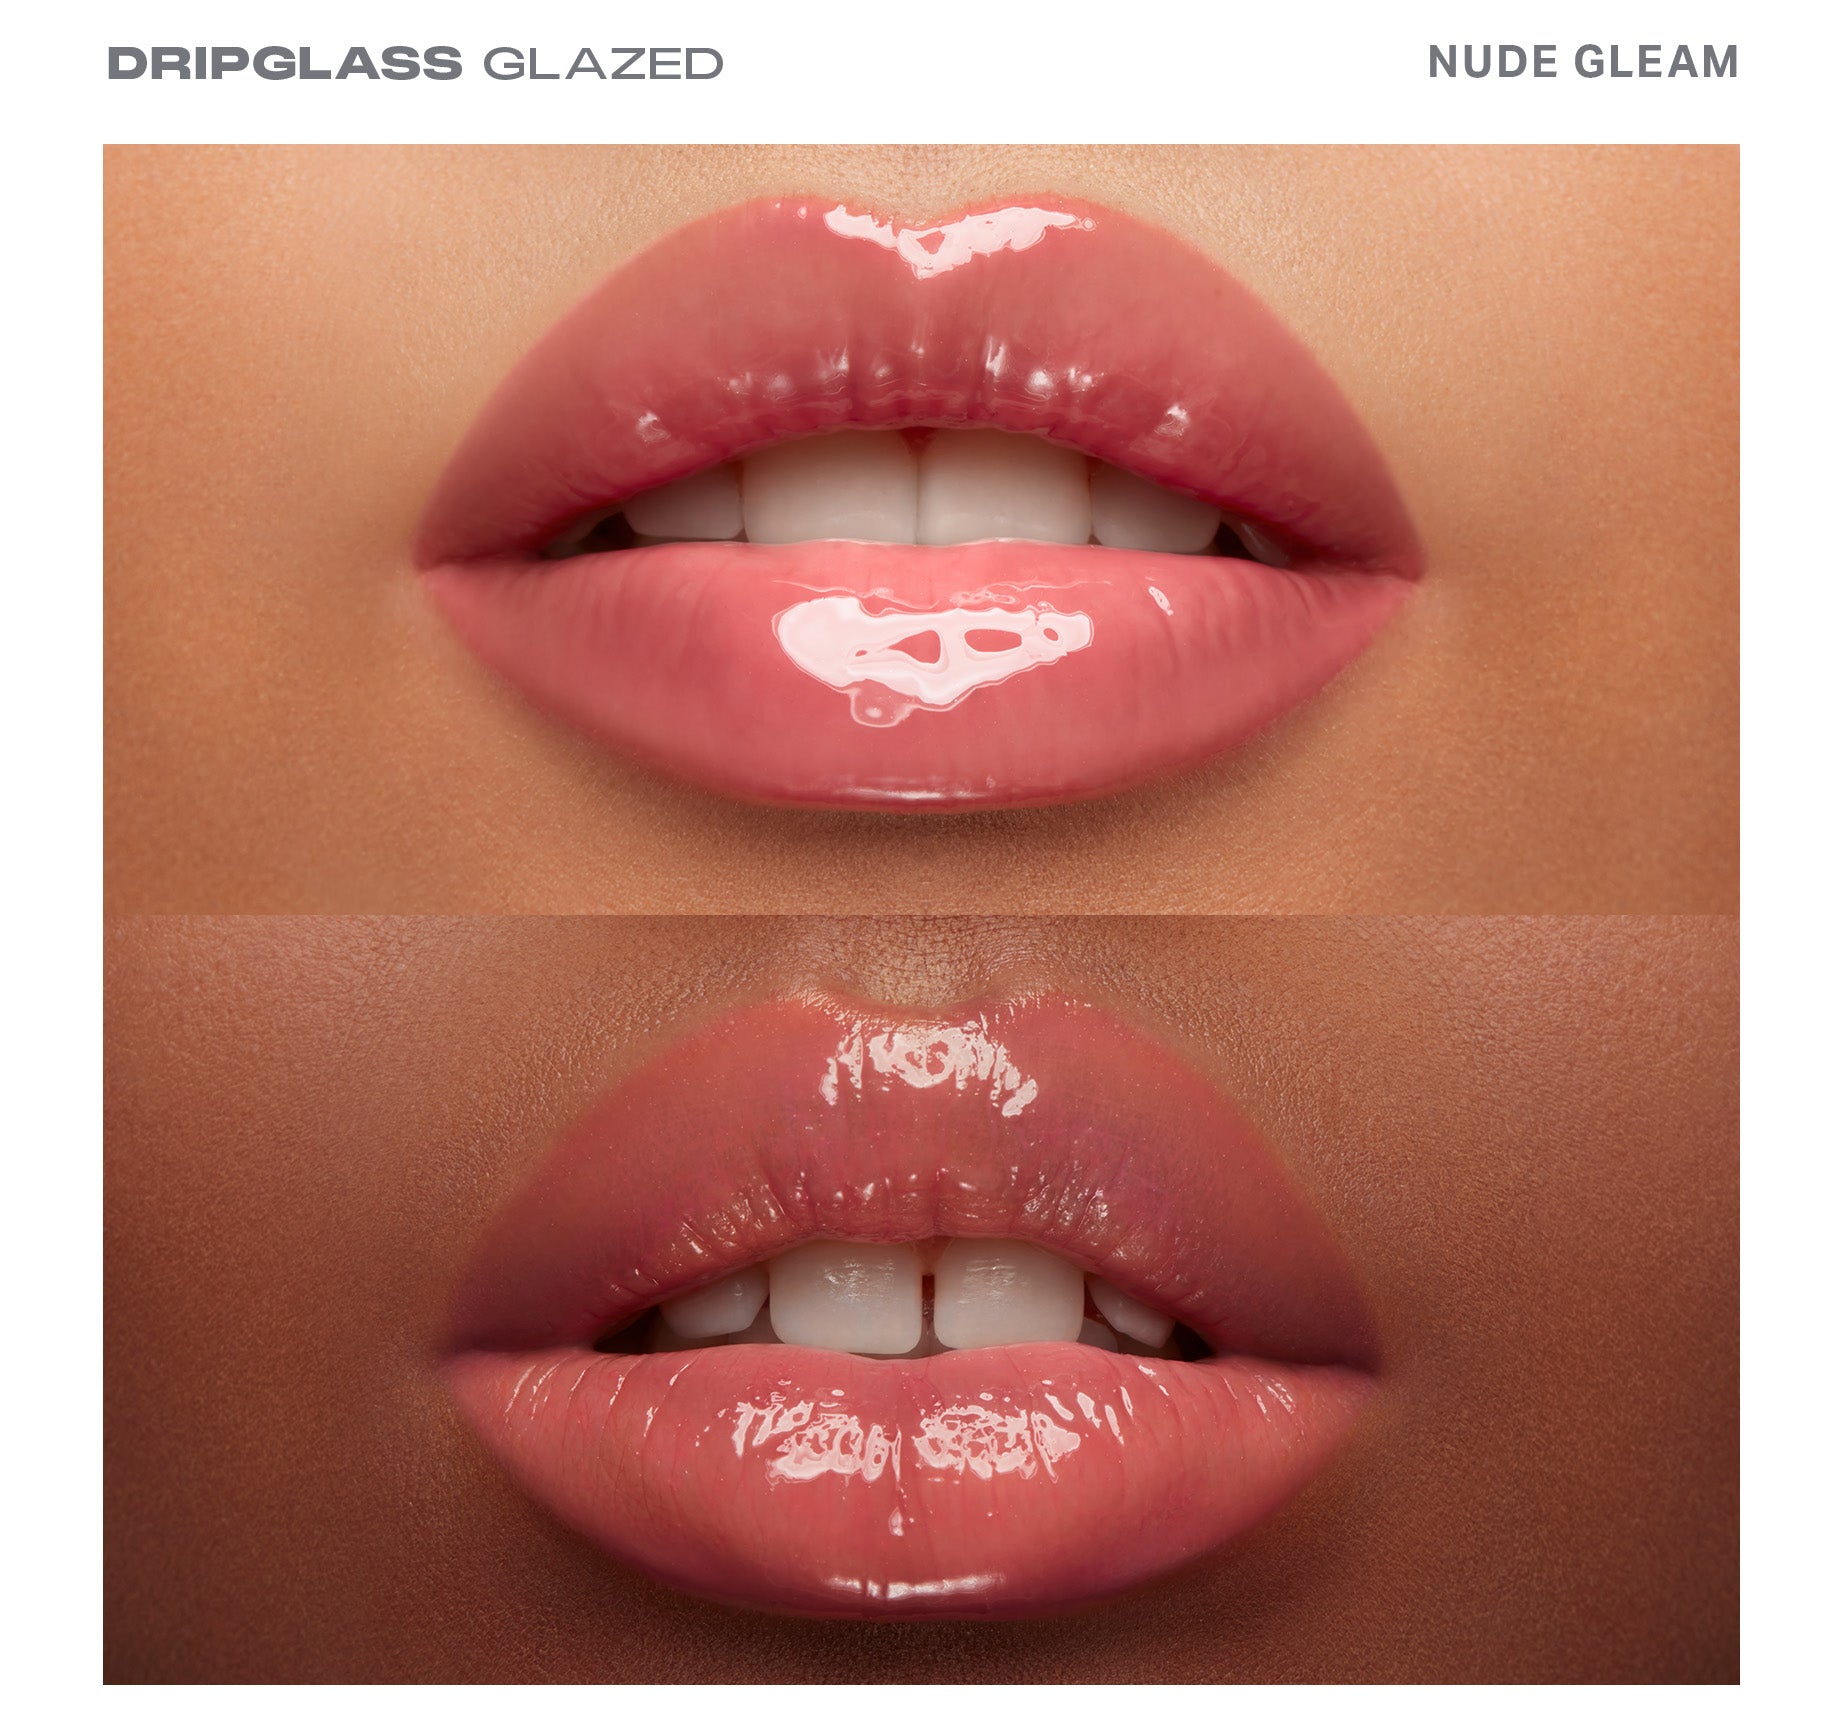 Dripglass Glazed High Shine Lip Gloss - Nude Gleam - Image 3